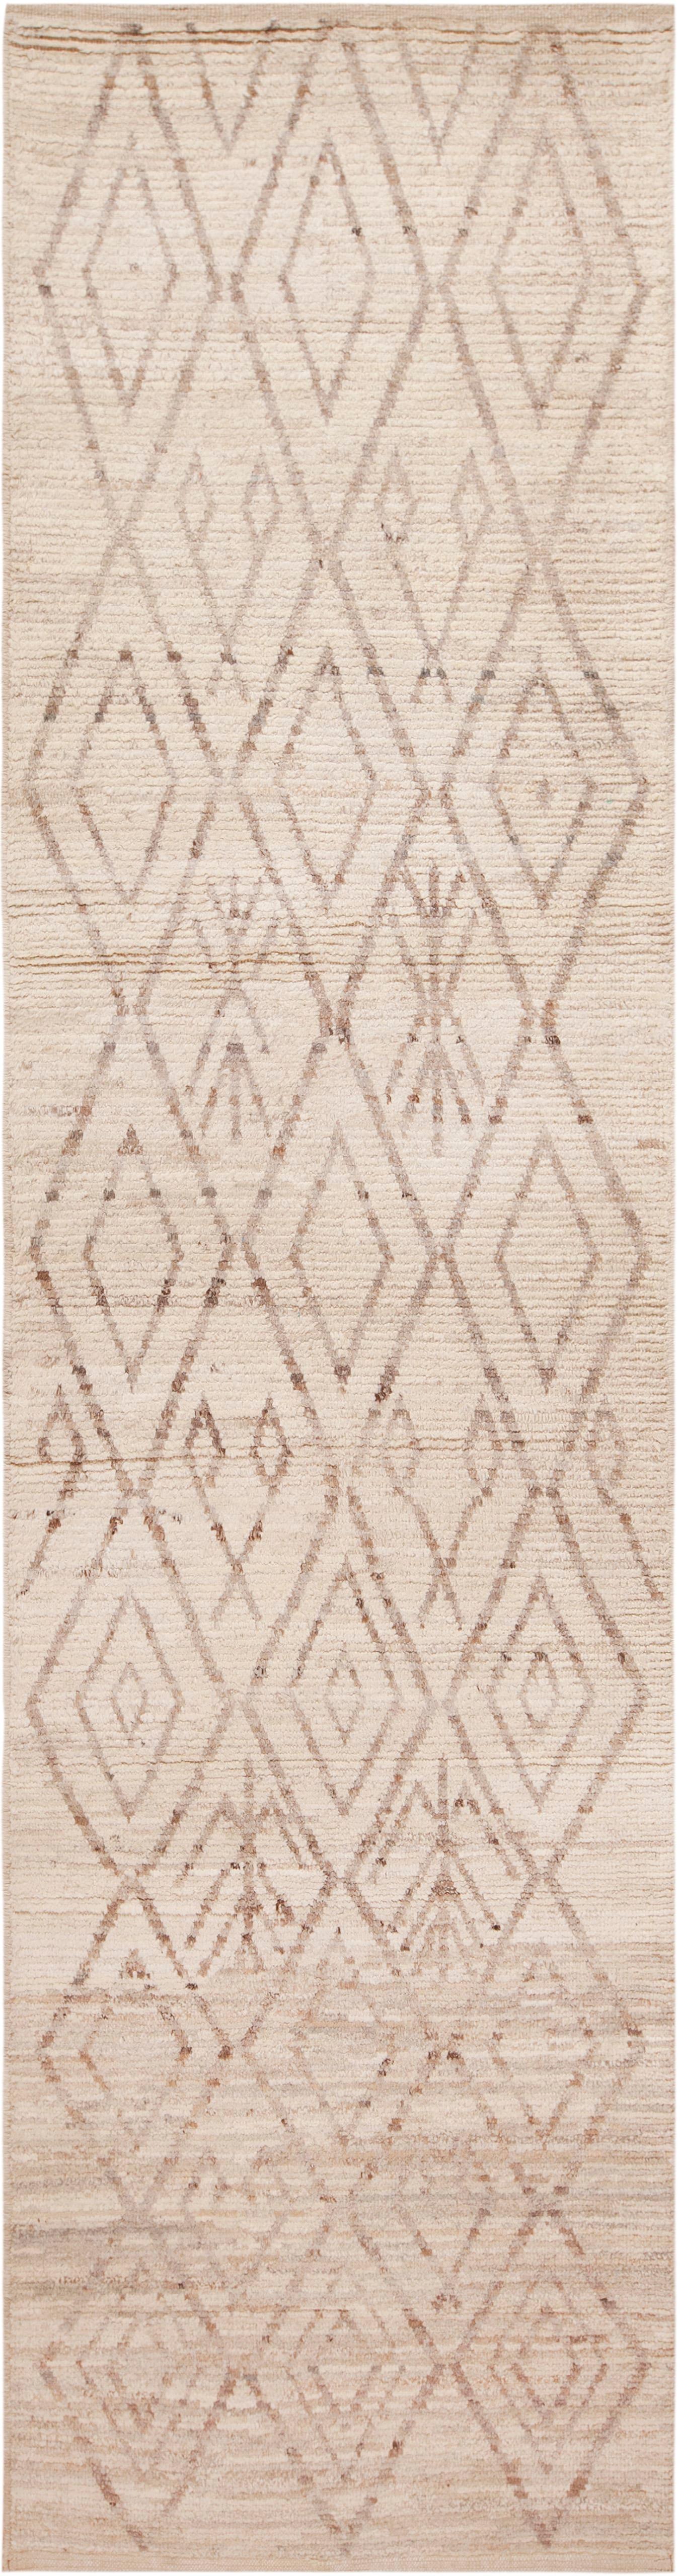 Nazmiyal Collection Tribal Beni Ourain Design Modern Runner Rug 3'4